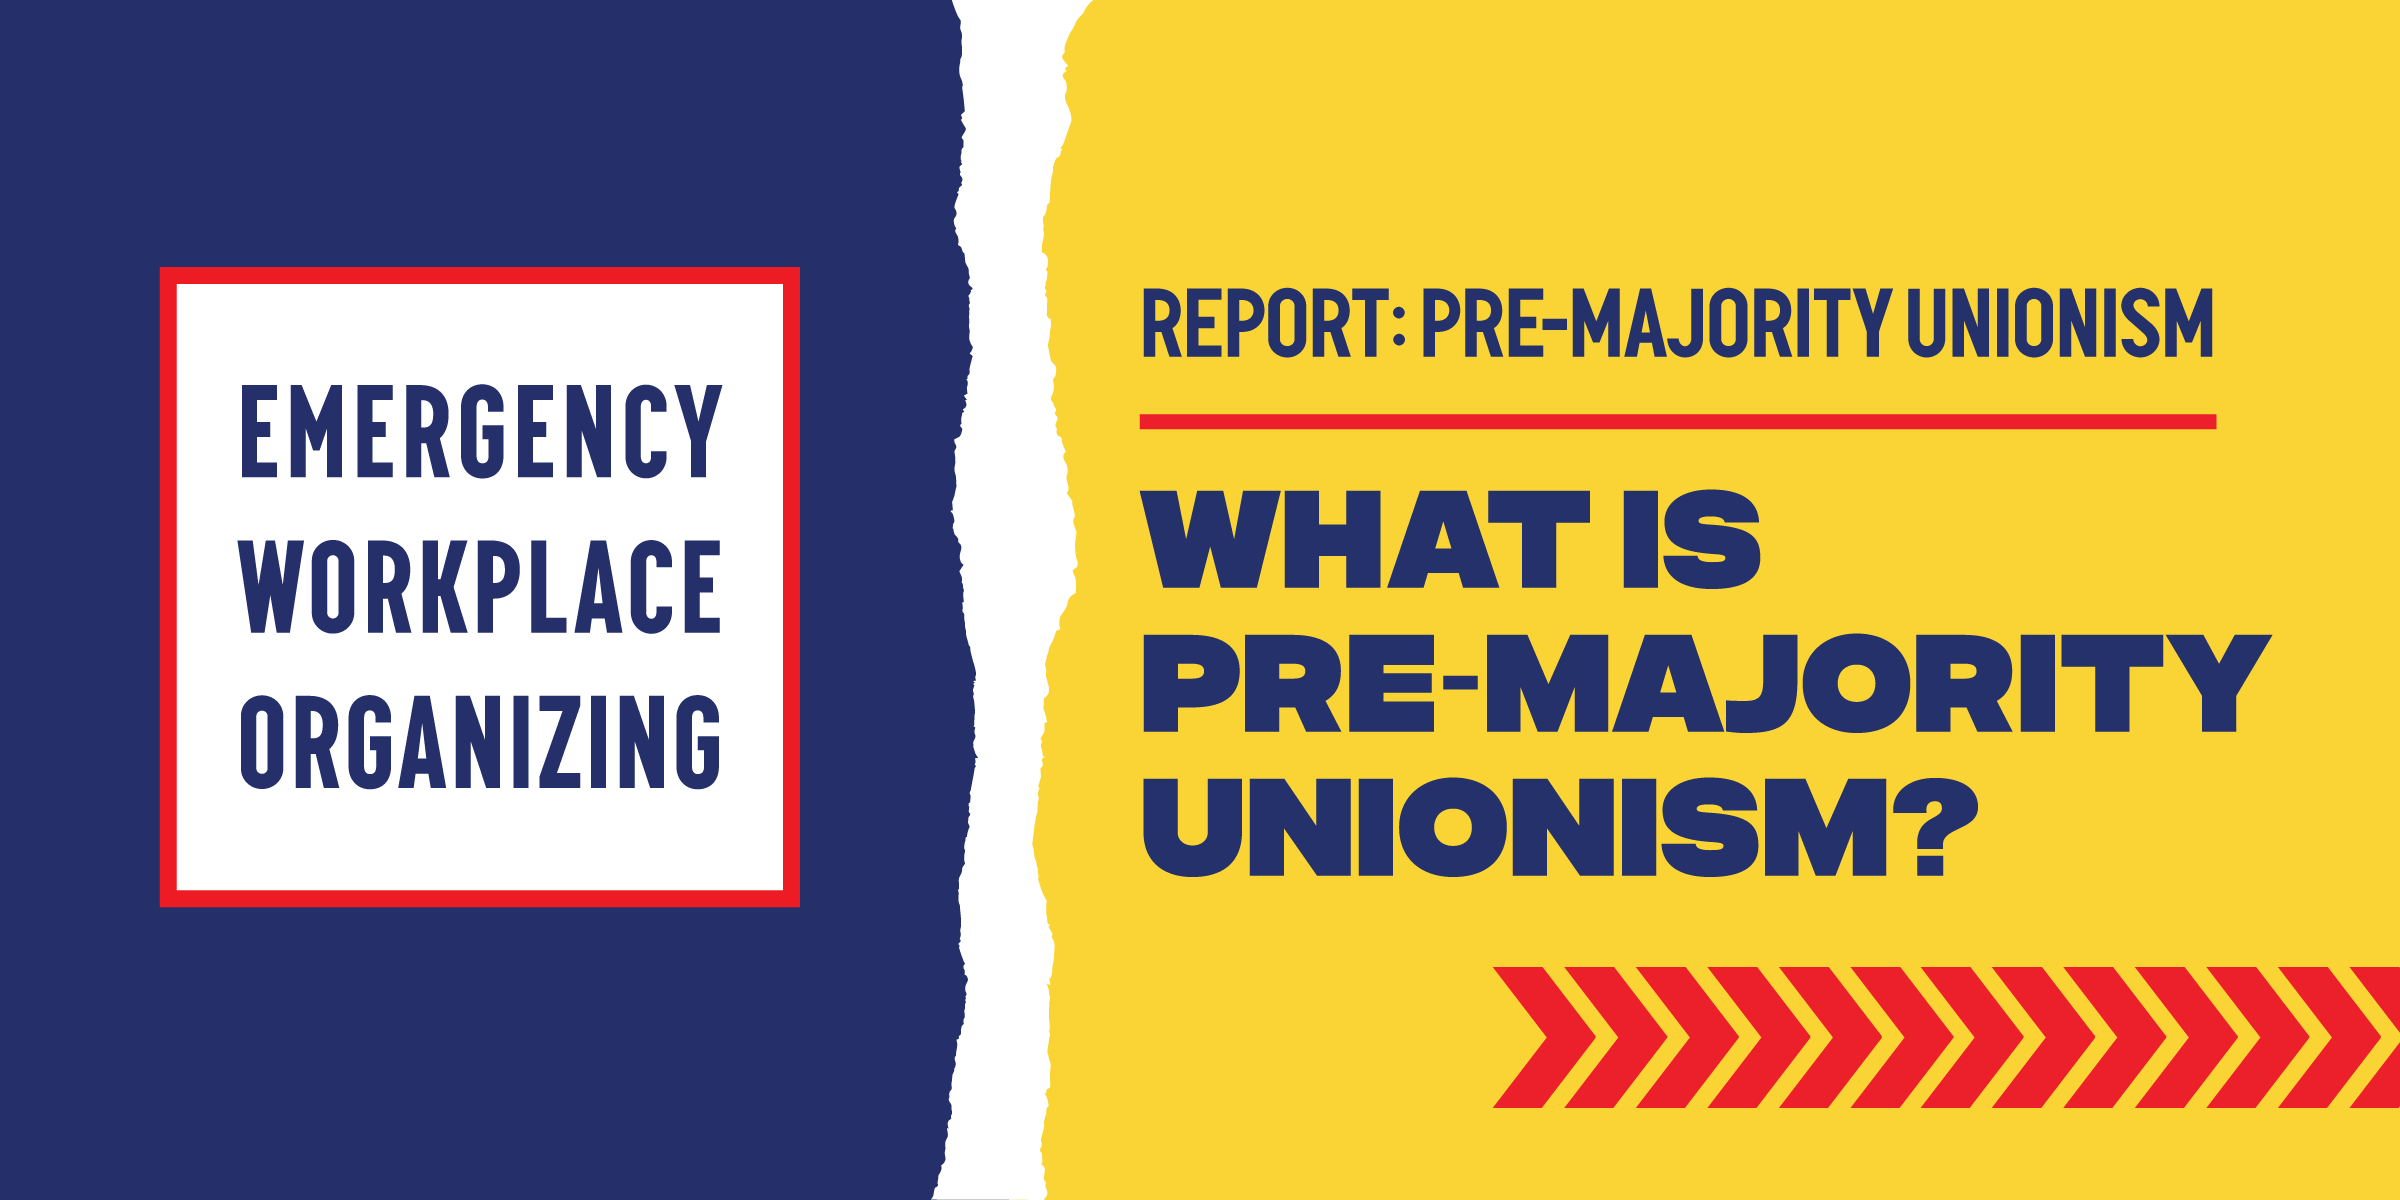 Report: Pre-Majority Unionism What Is Pre-Majority Unionism?